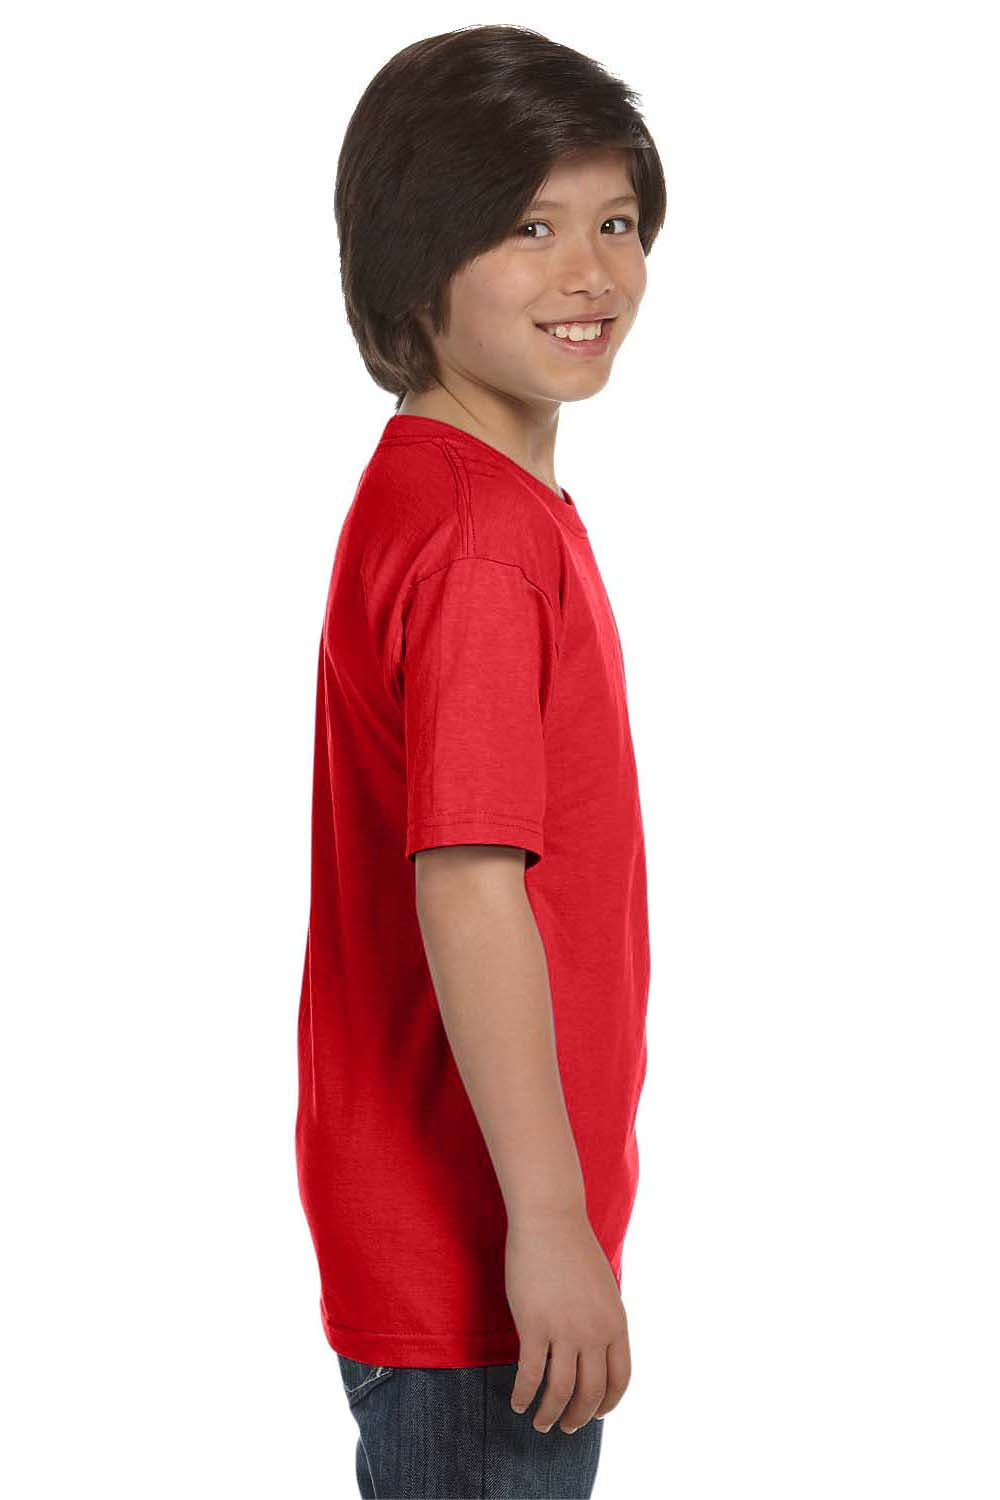 Hanes 5480 ComfortSoft Short Sleeve Crewneck T-Shirt Athletic Red Side